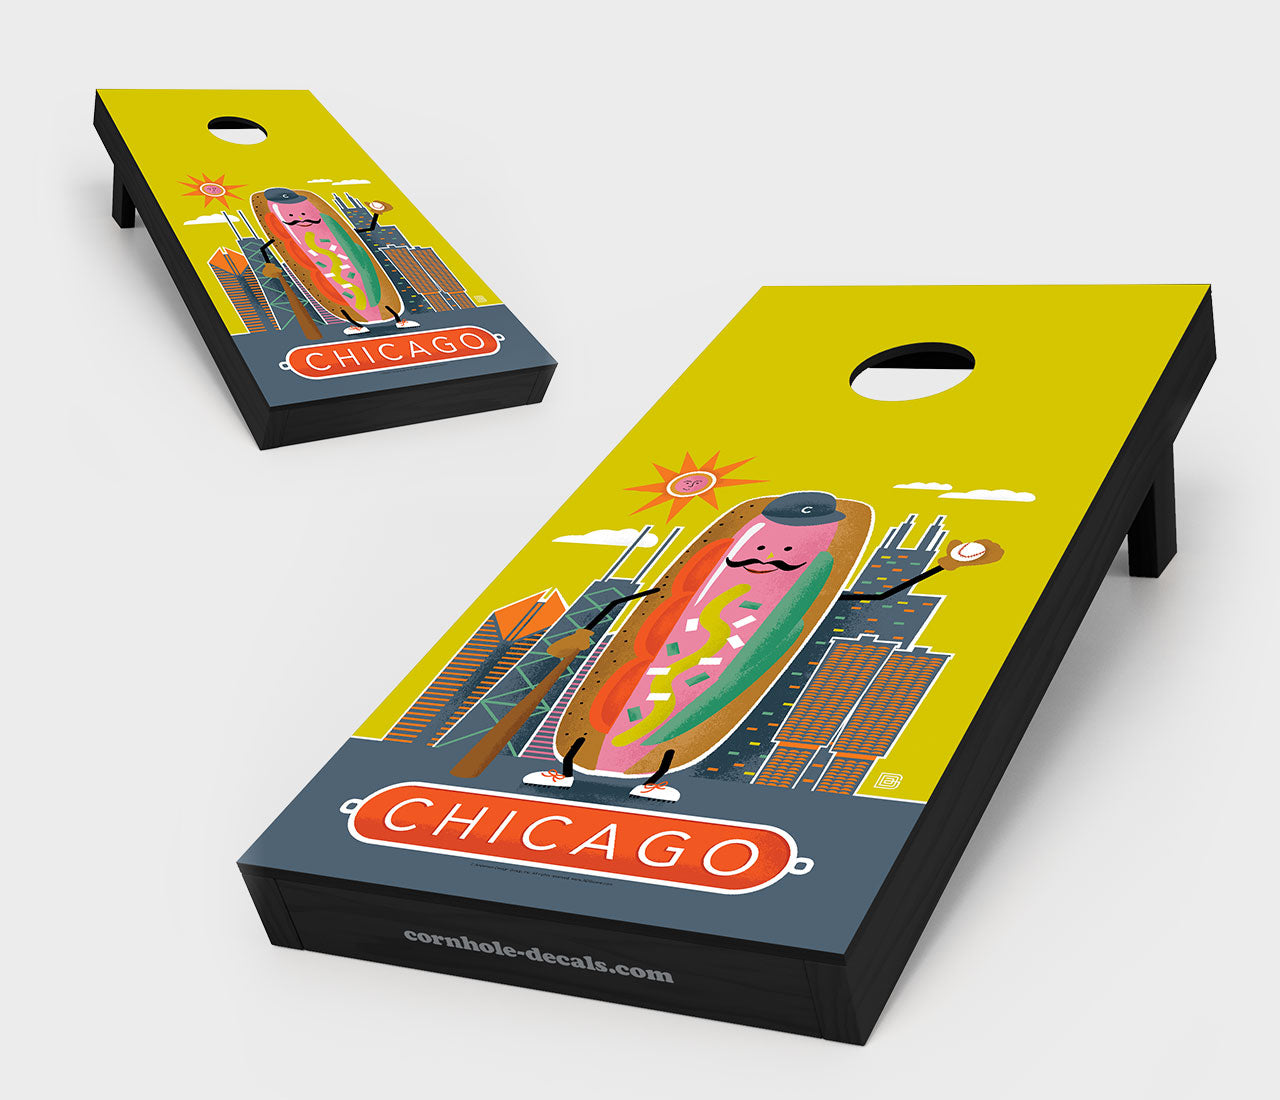 Chuggles Cornhole - Anderson Design Group - Chicago Hotdog Cornhole Board Set